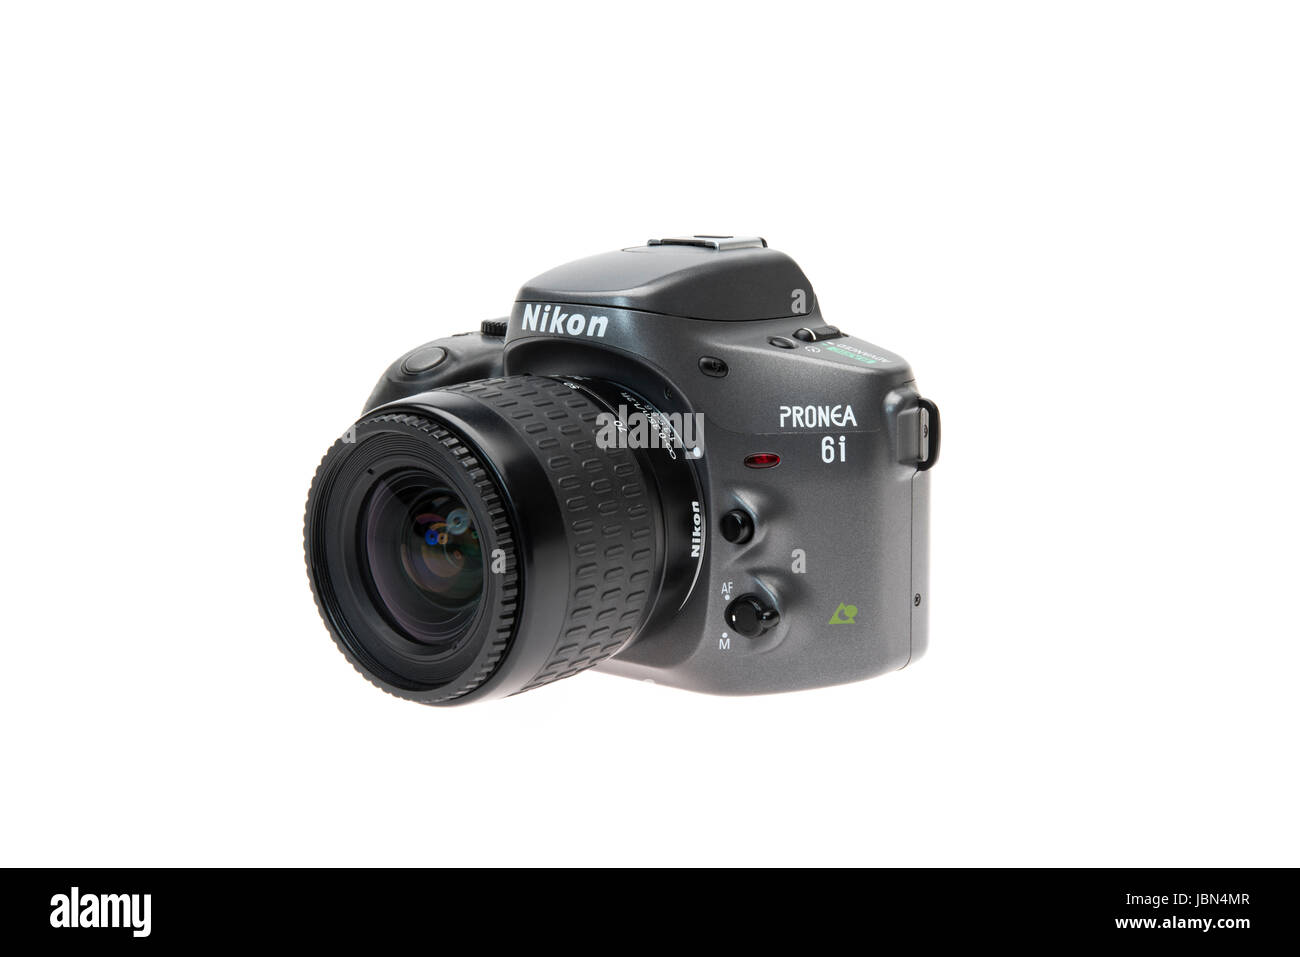 Nikon PRONEA 6i (600i) mit IX-Nikkor Objektiv APS Film SLR Kamera veröffentlicht 1996 Stockfoto